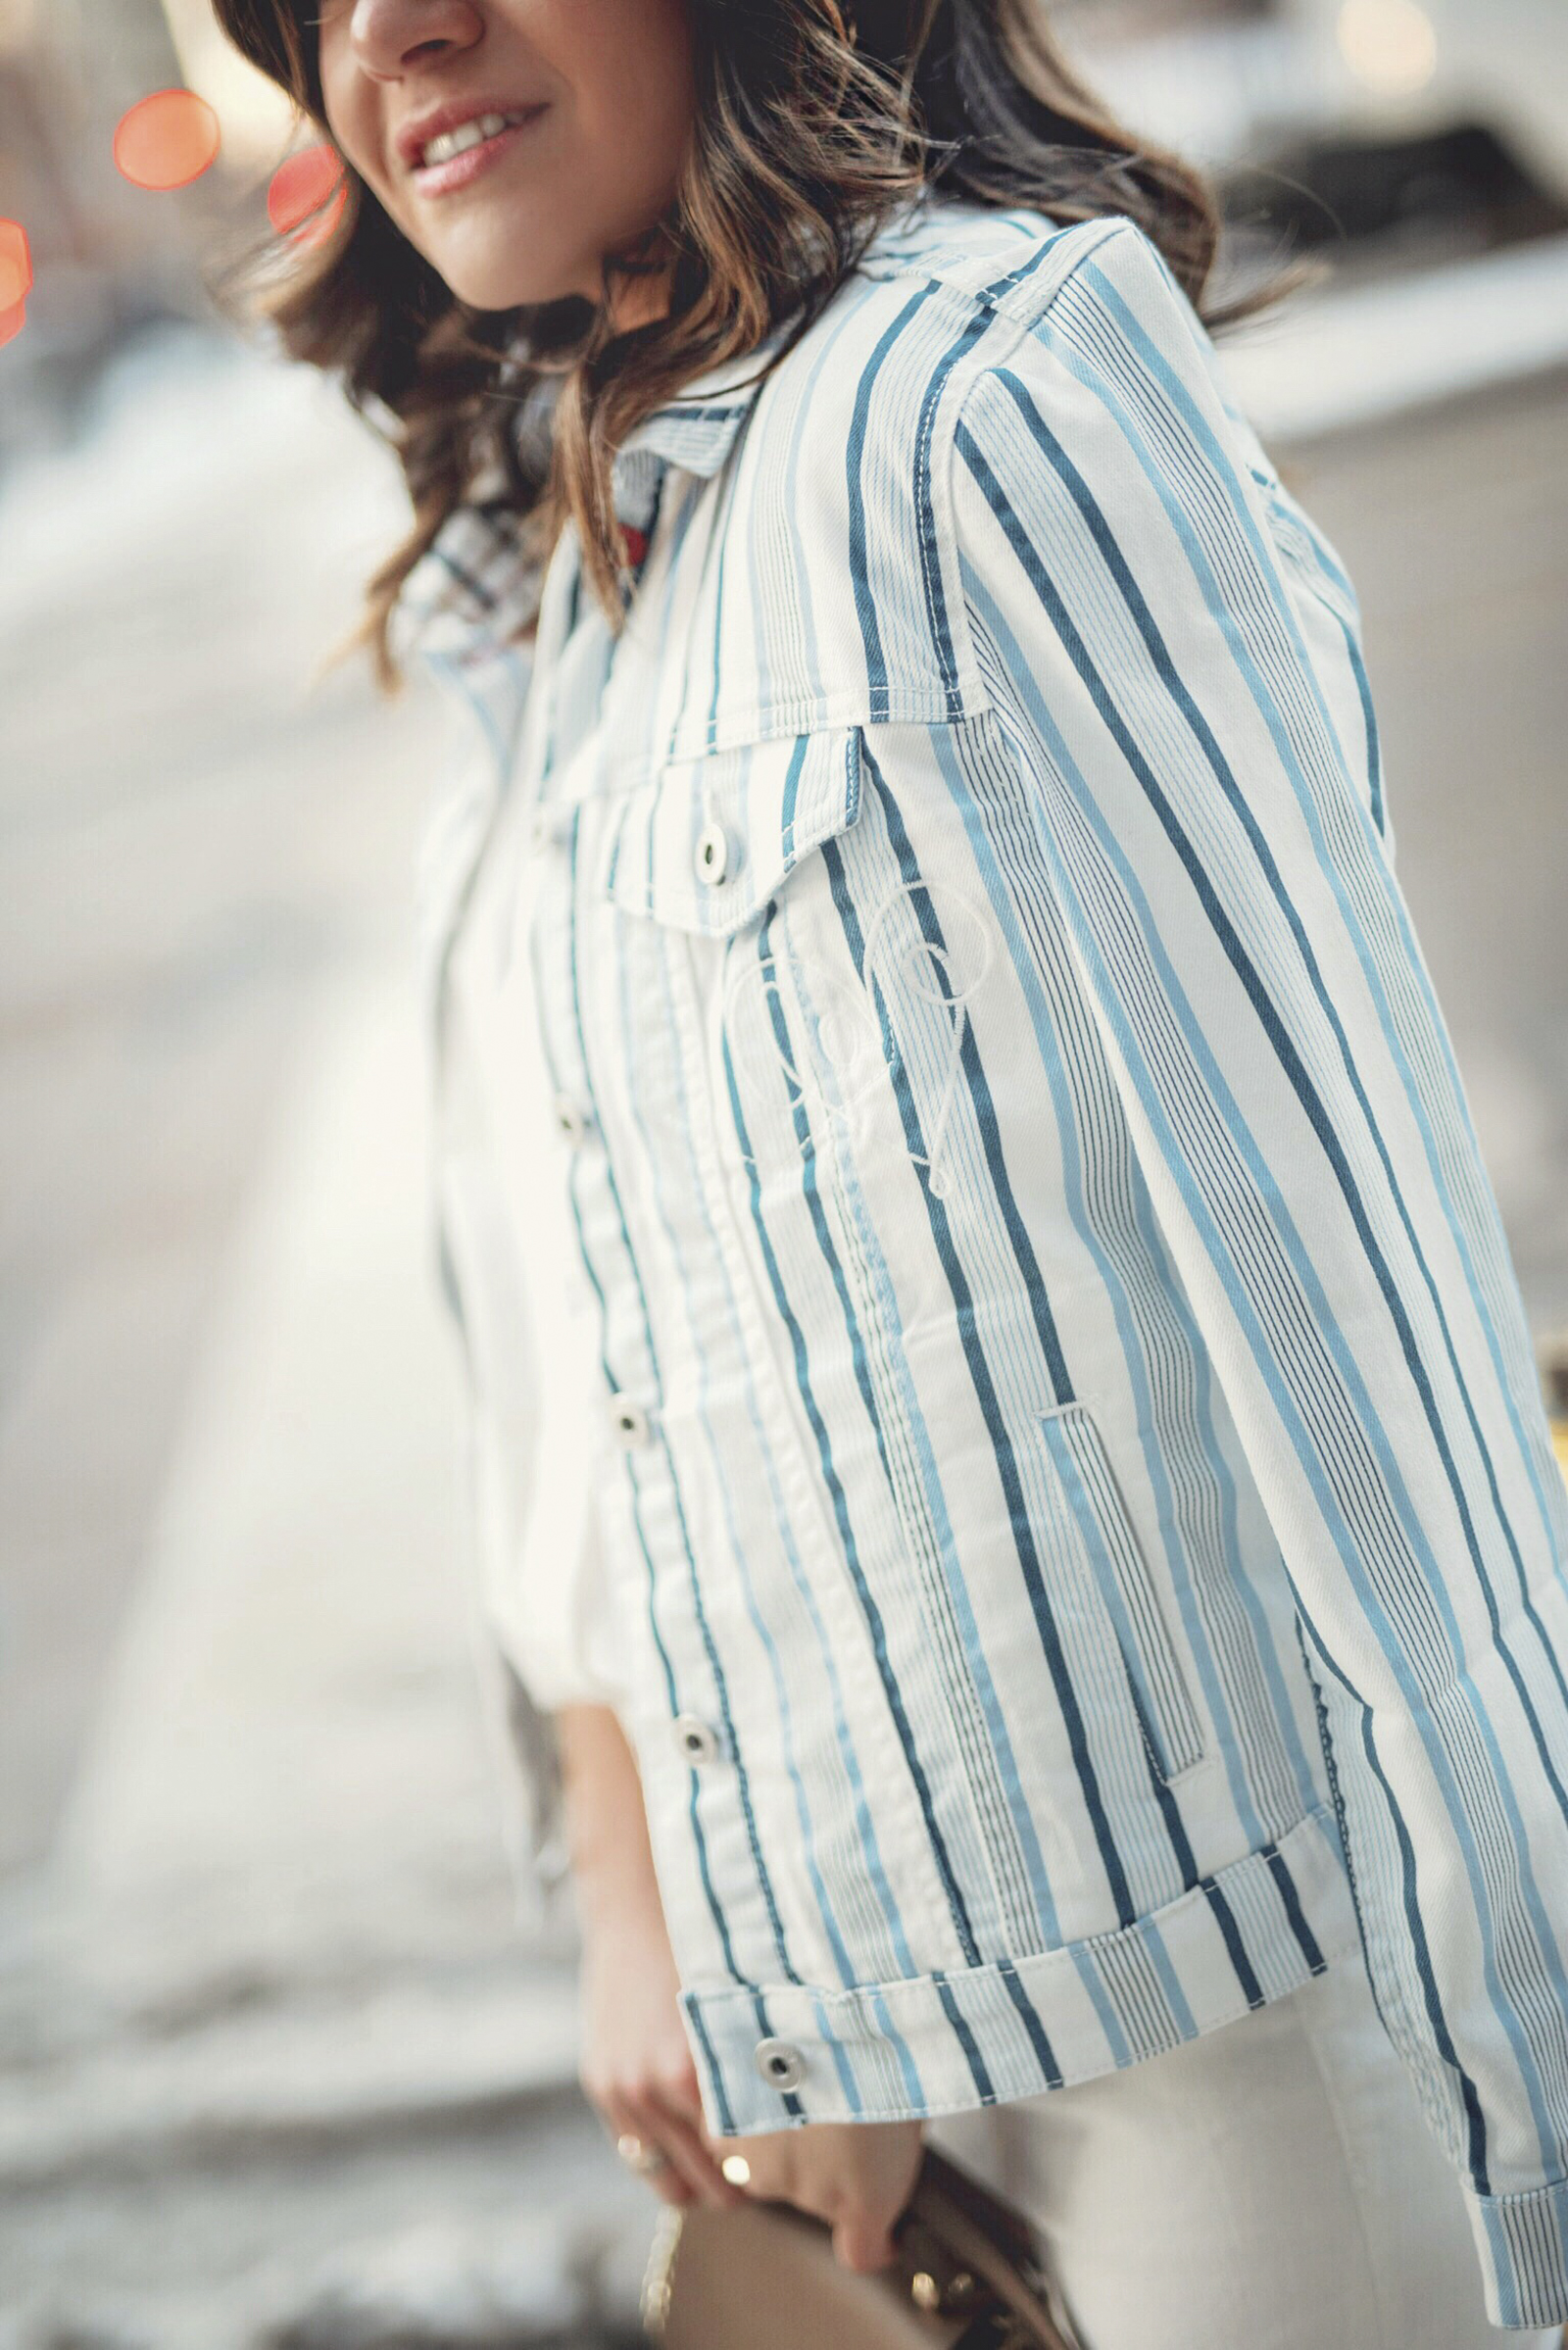 Carolina Hellal of Chic Talk wearing a white button down, white jeans and striped jacket via EV1 a Walmart brand.